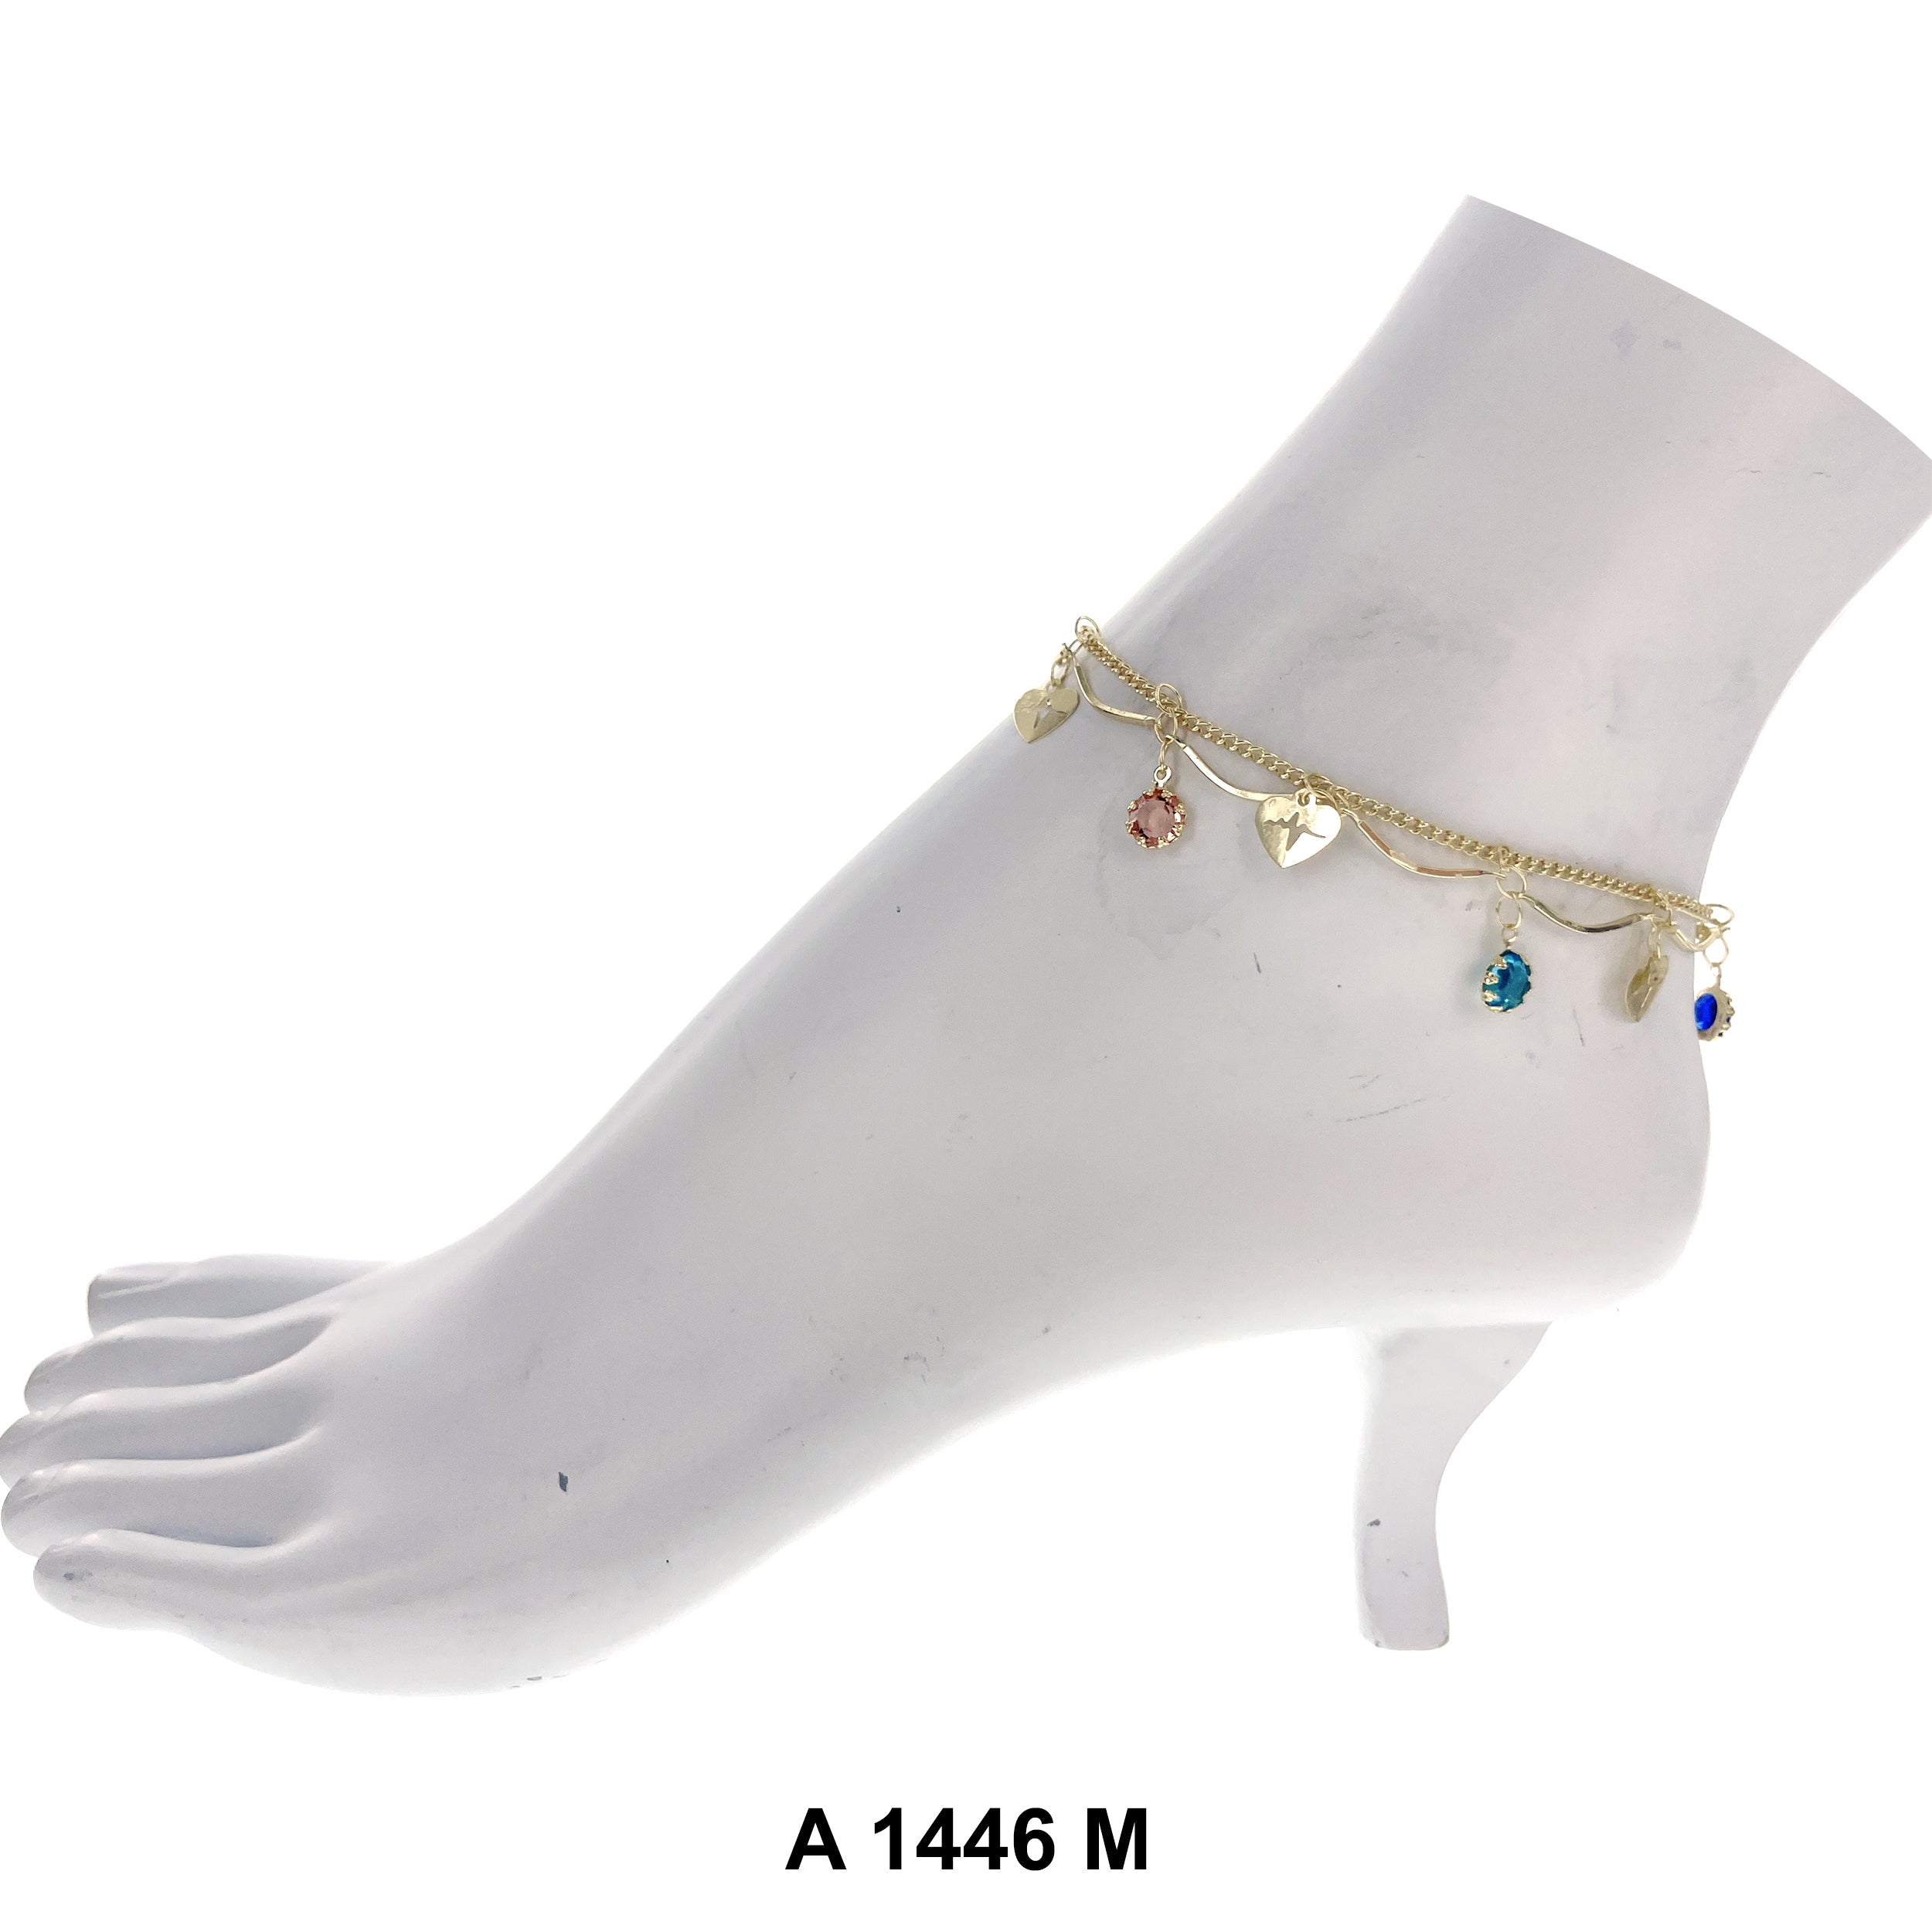 Fashion Anklets A 1446 M